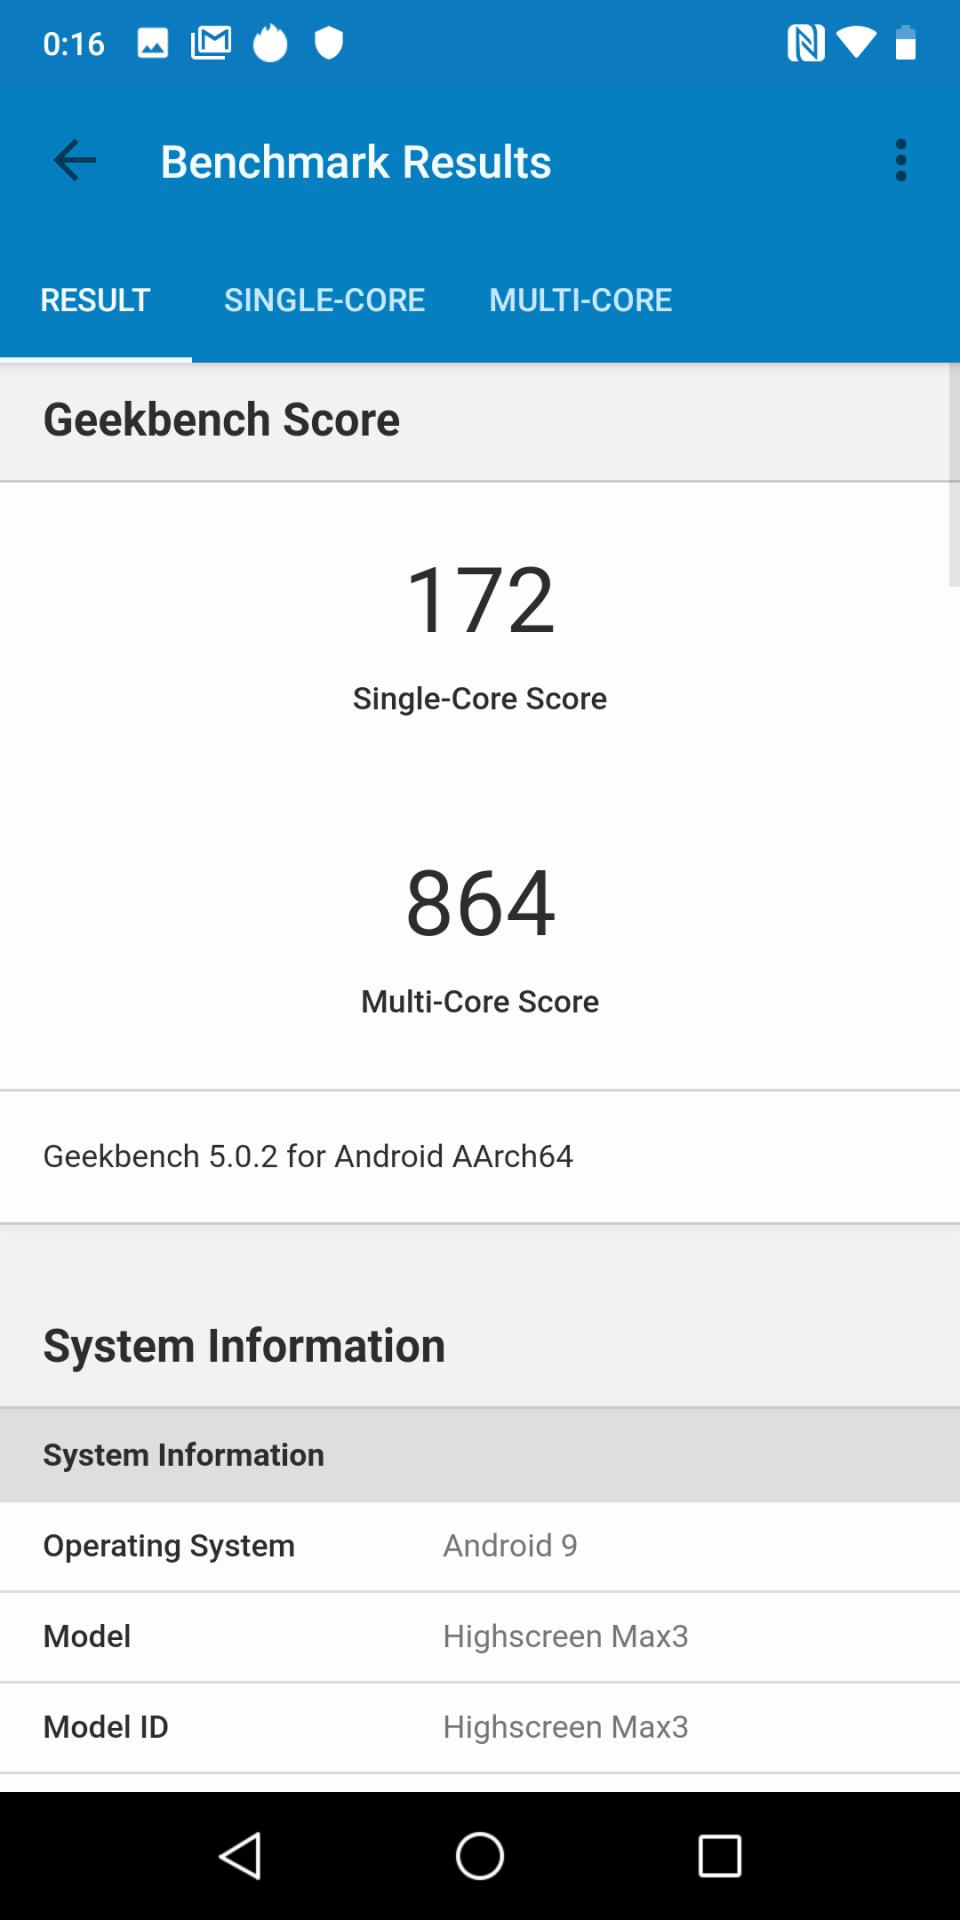 Обзор смартфона Highscreen Max 3